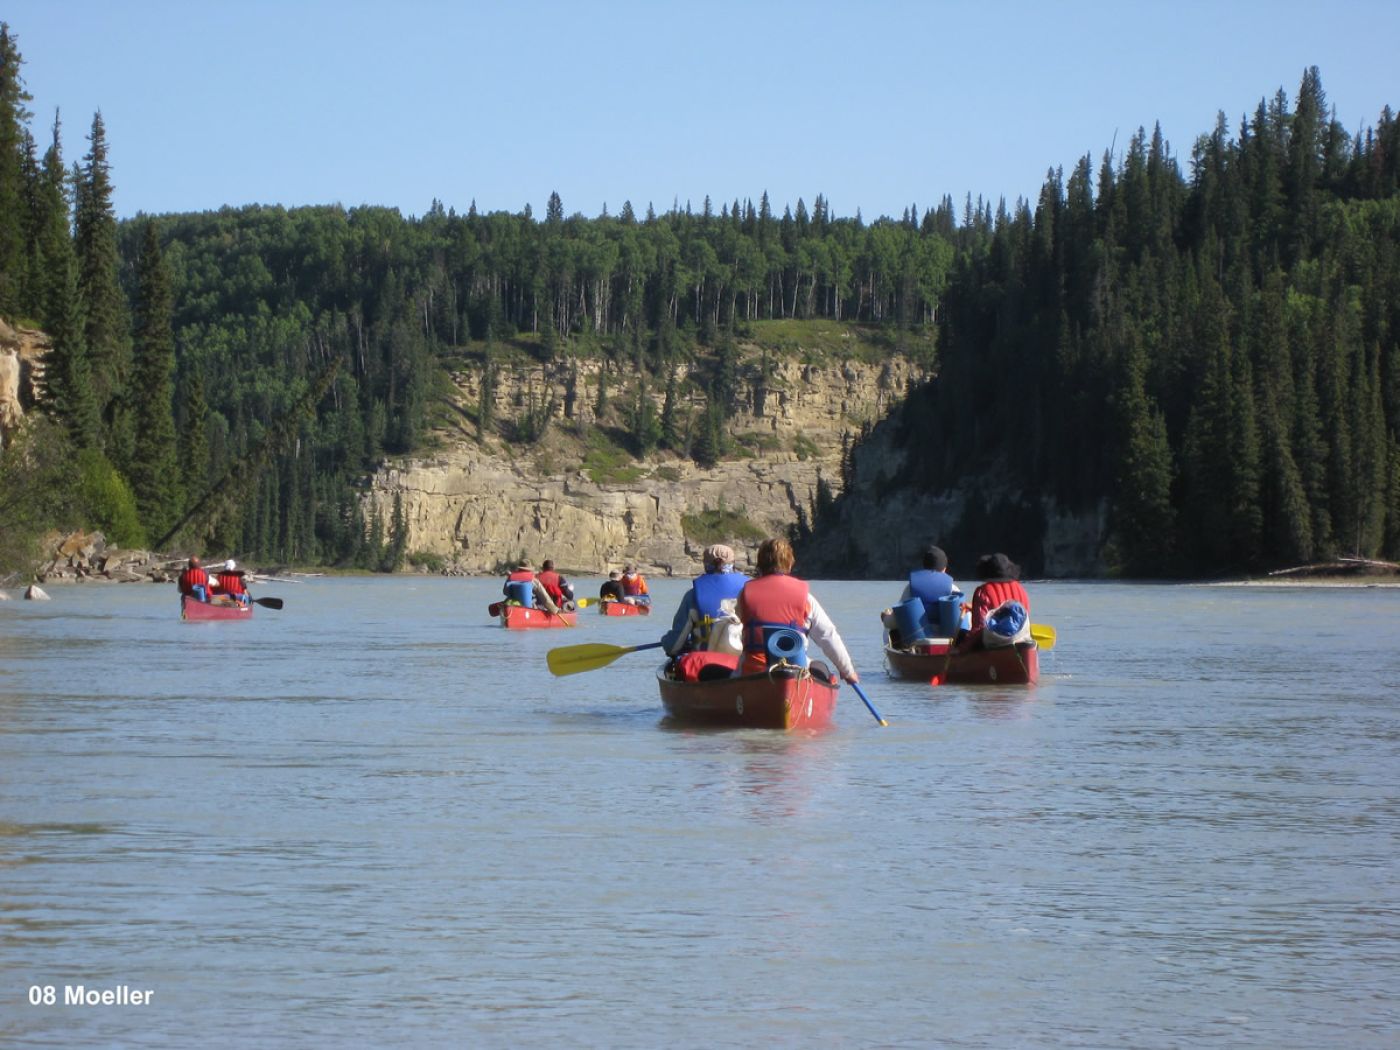 canoeing group on river in alberta | kanu gruppe auf fluss in alberta kanada